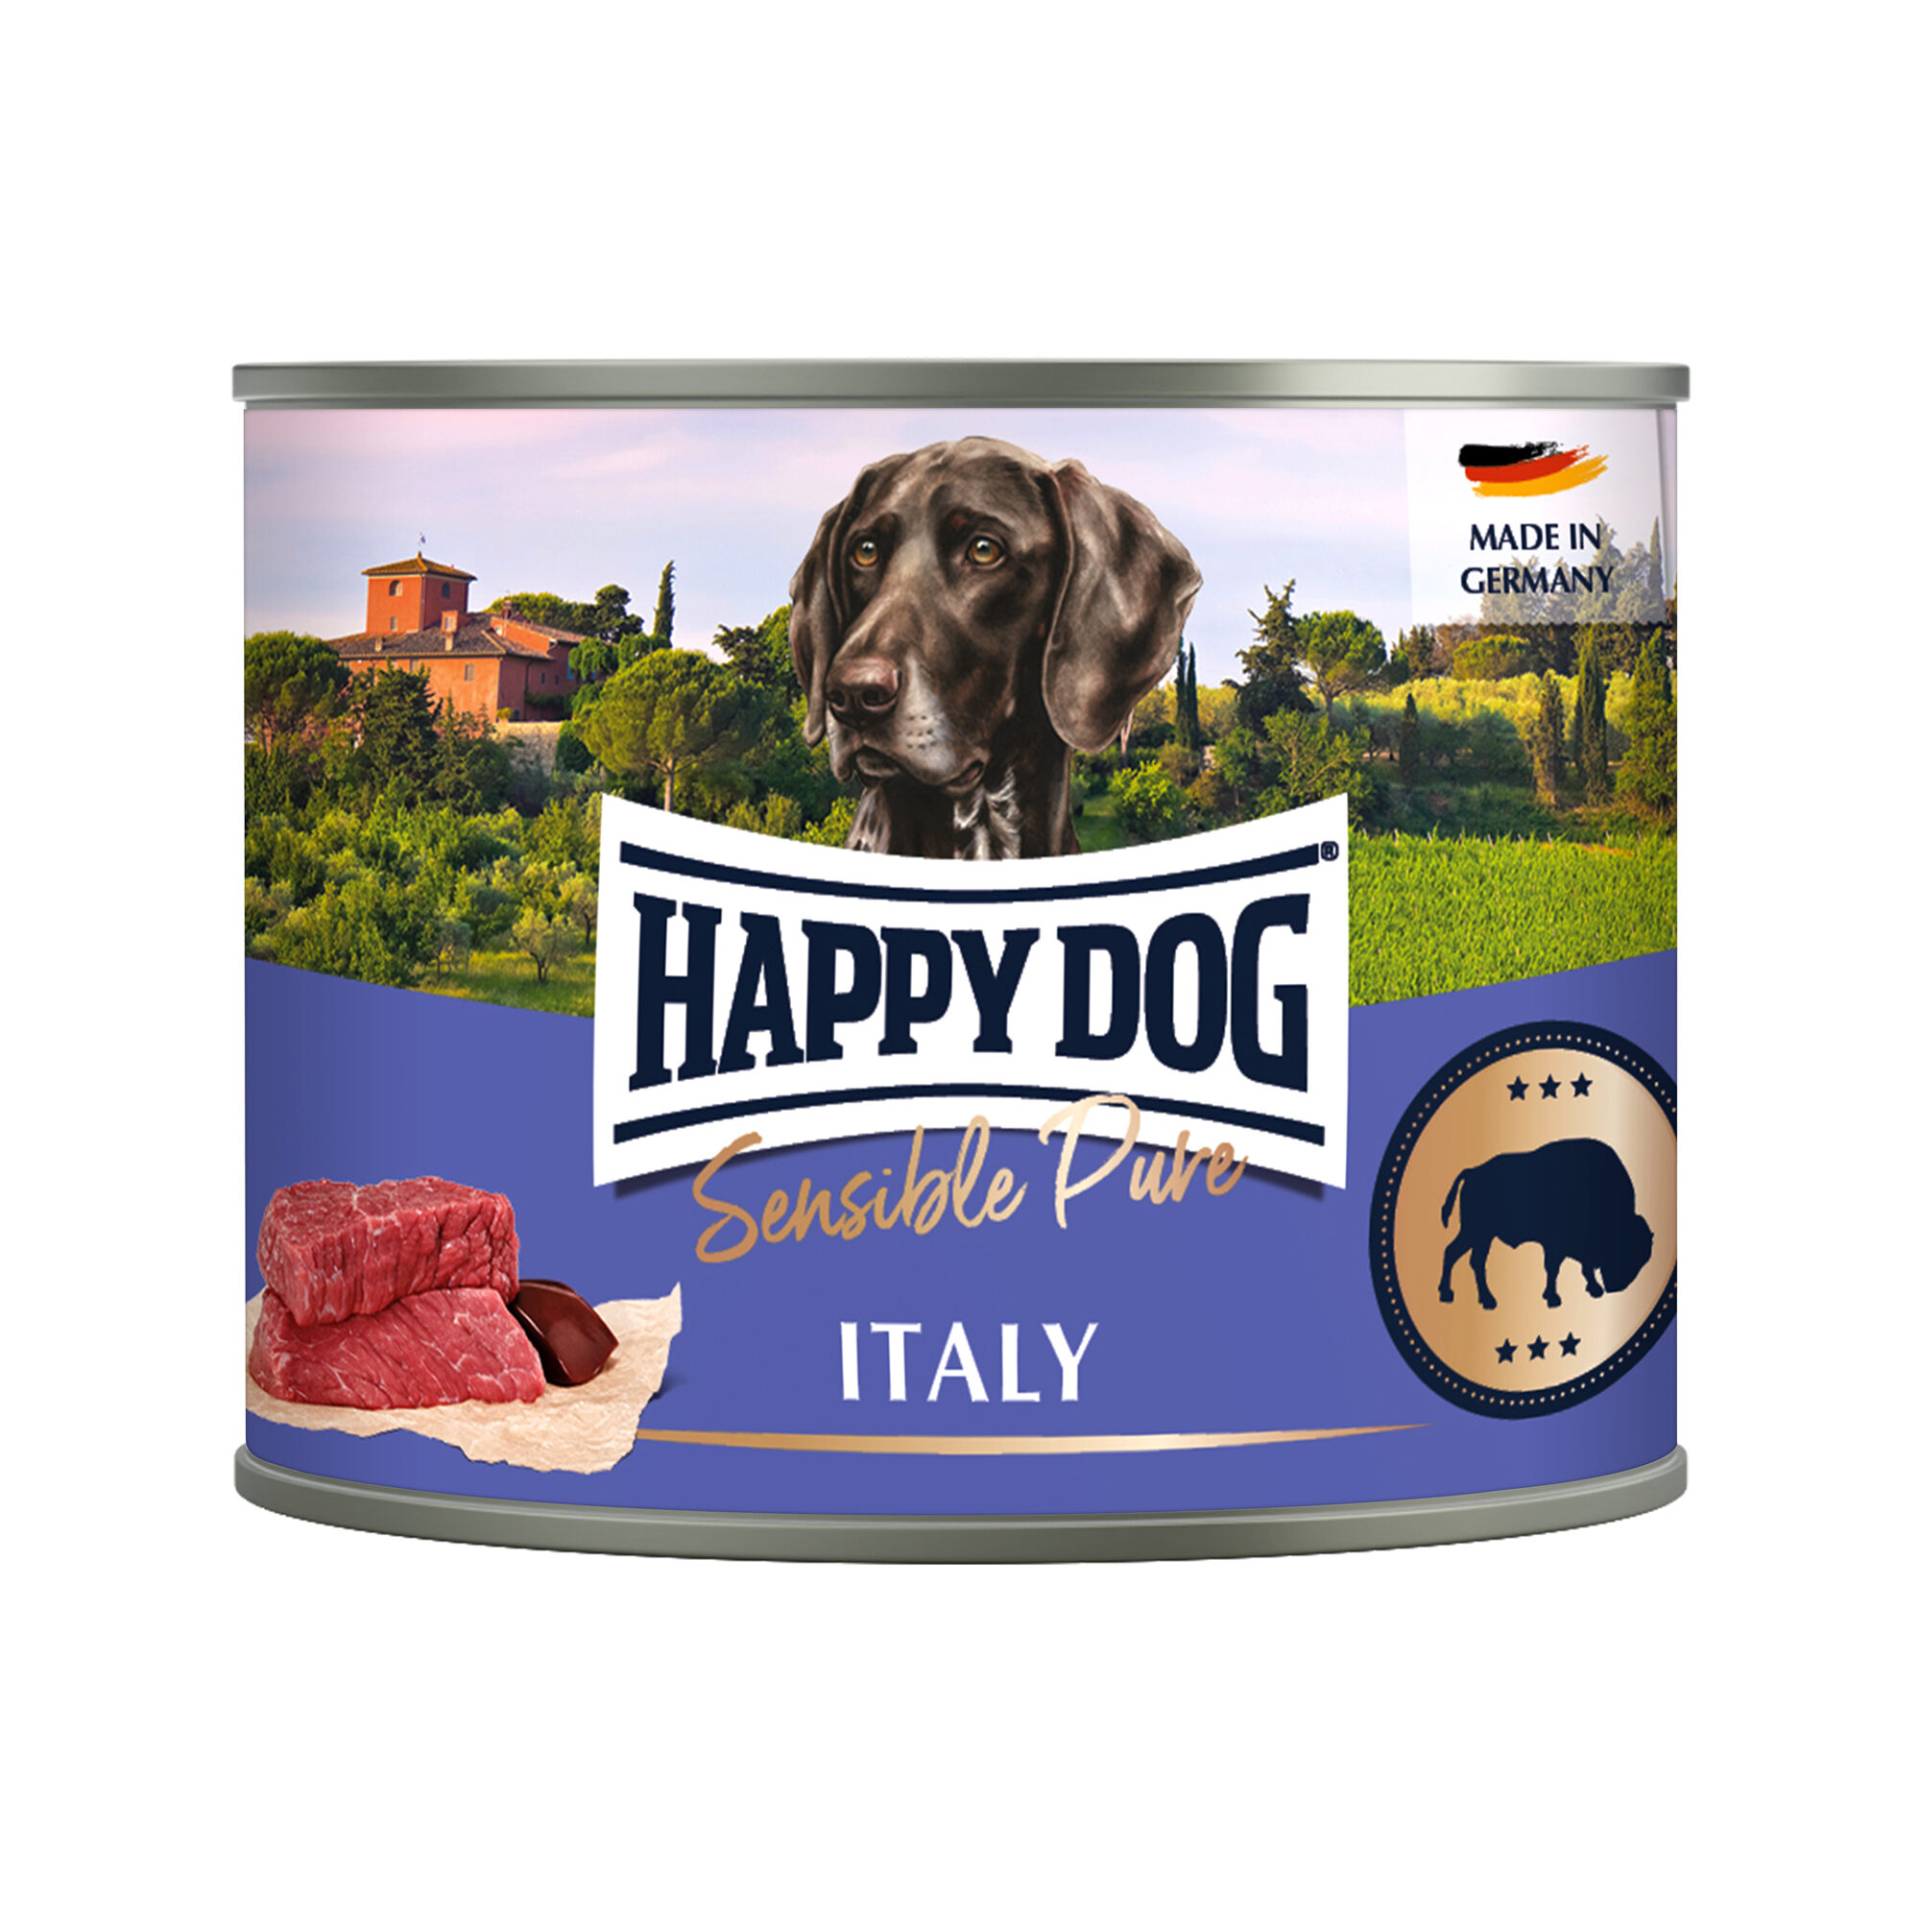 Happy Dog Sensible Pure Italy - Büffel - 6 x 800 g von Happy Dog